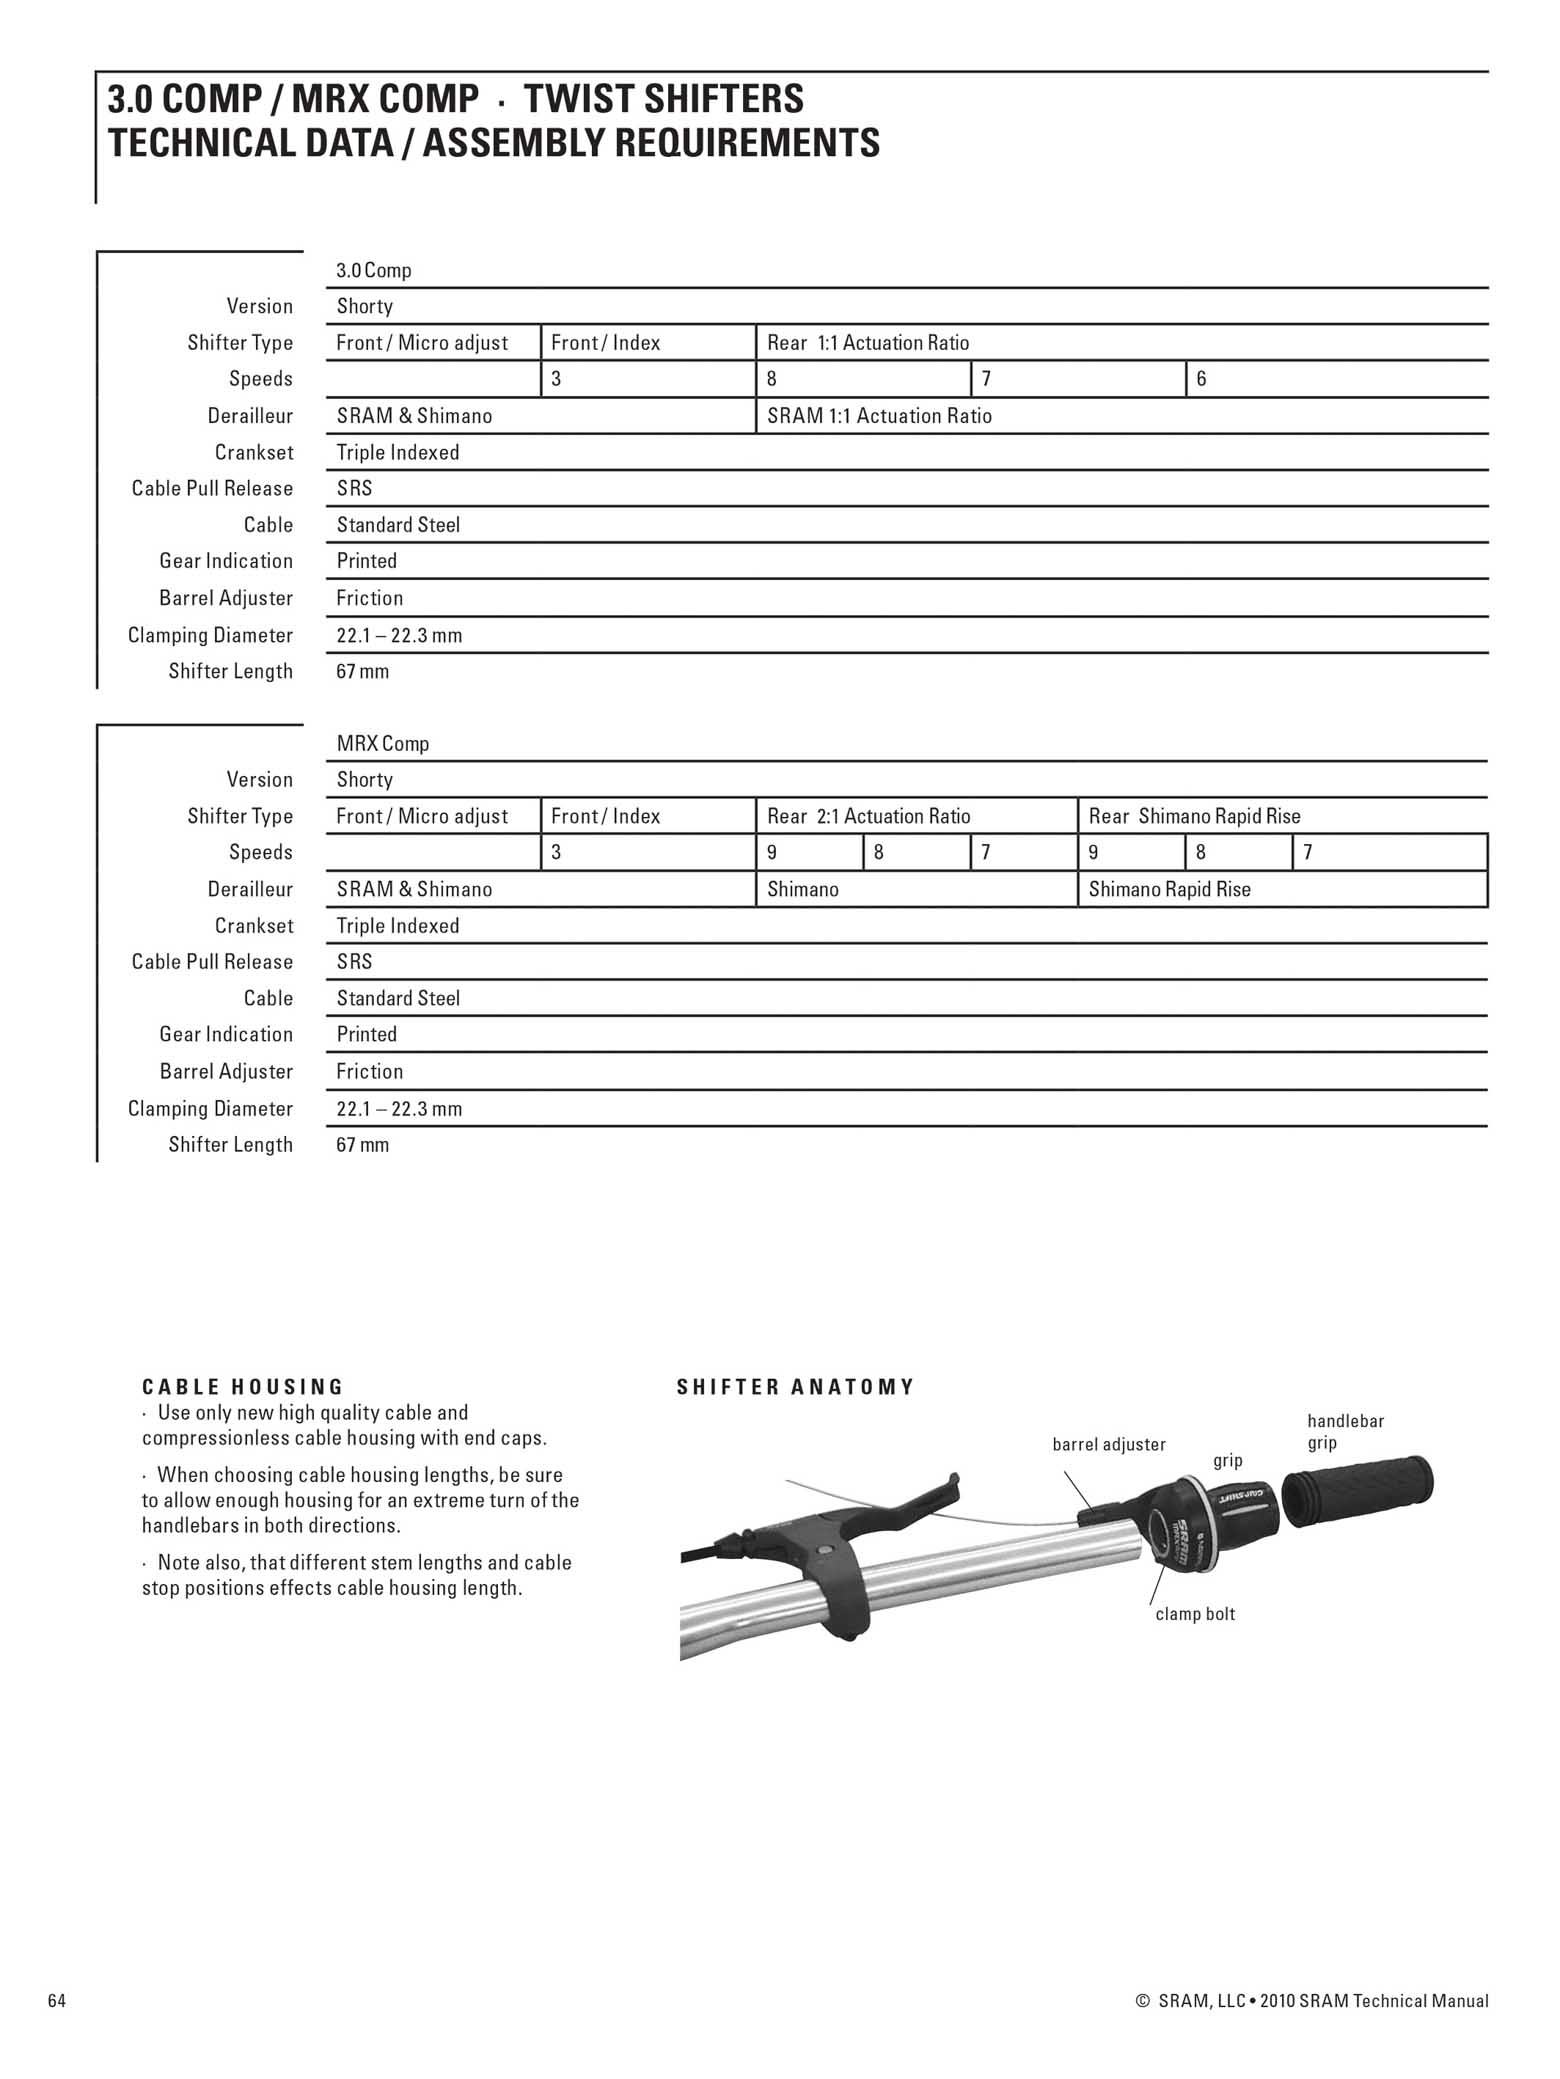 SRAM Technical Manual 2010 page 064 main image